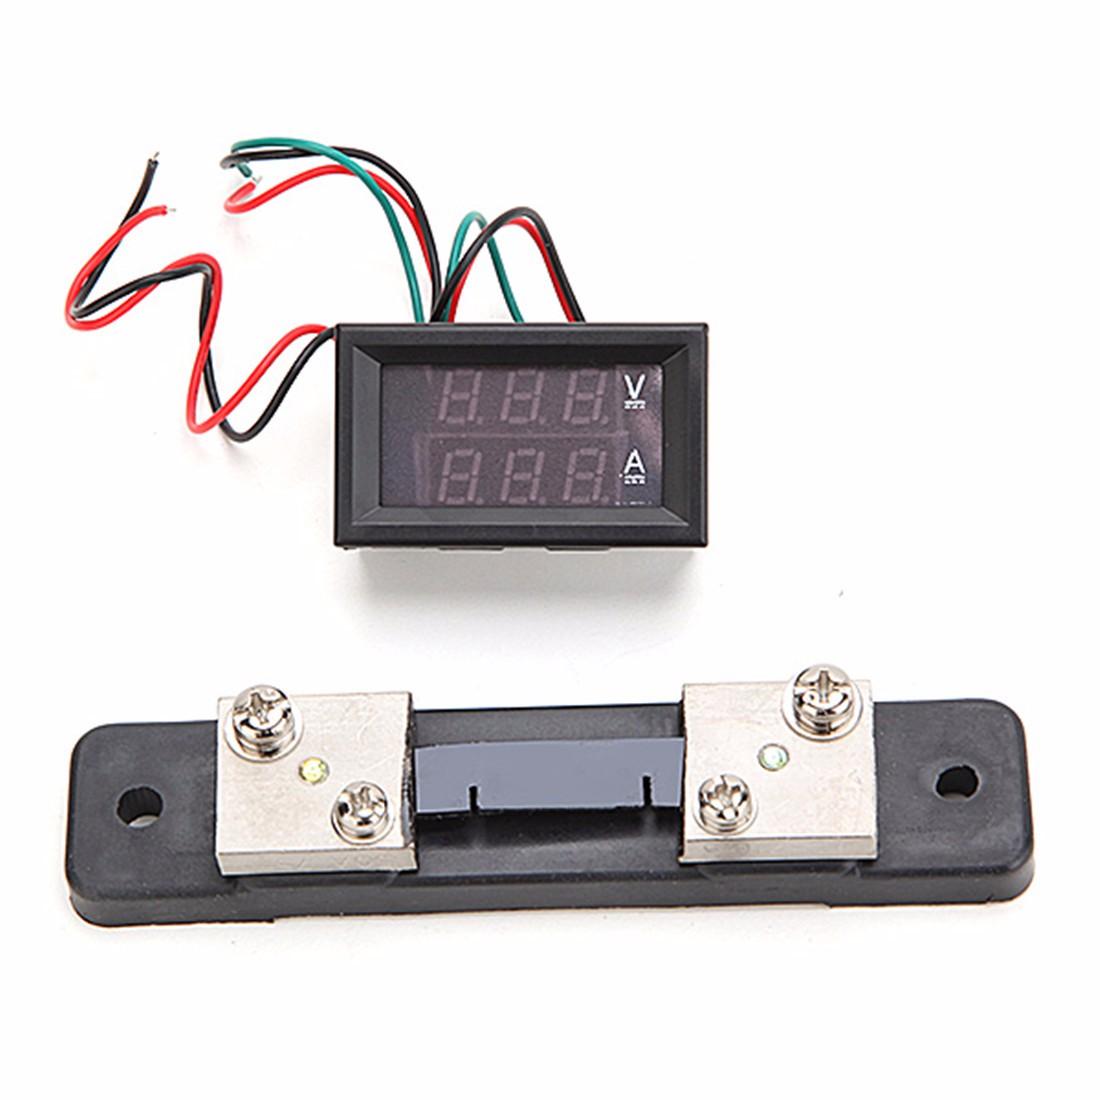 

5pcs Mini Digital Blue + Red Led DC Current Meter Voltmeter With 50A Ampere Shunt